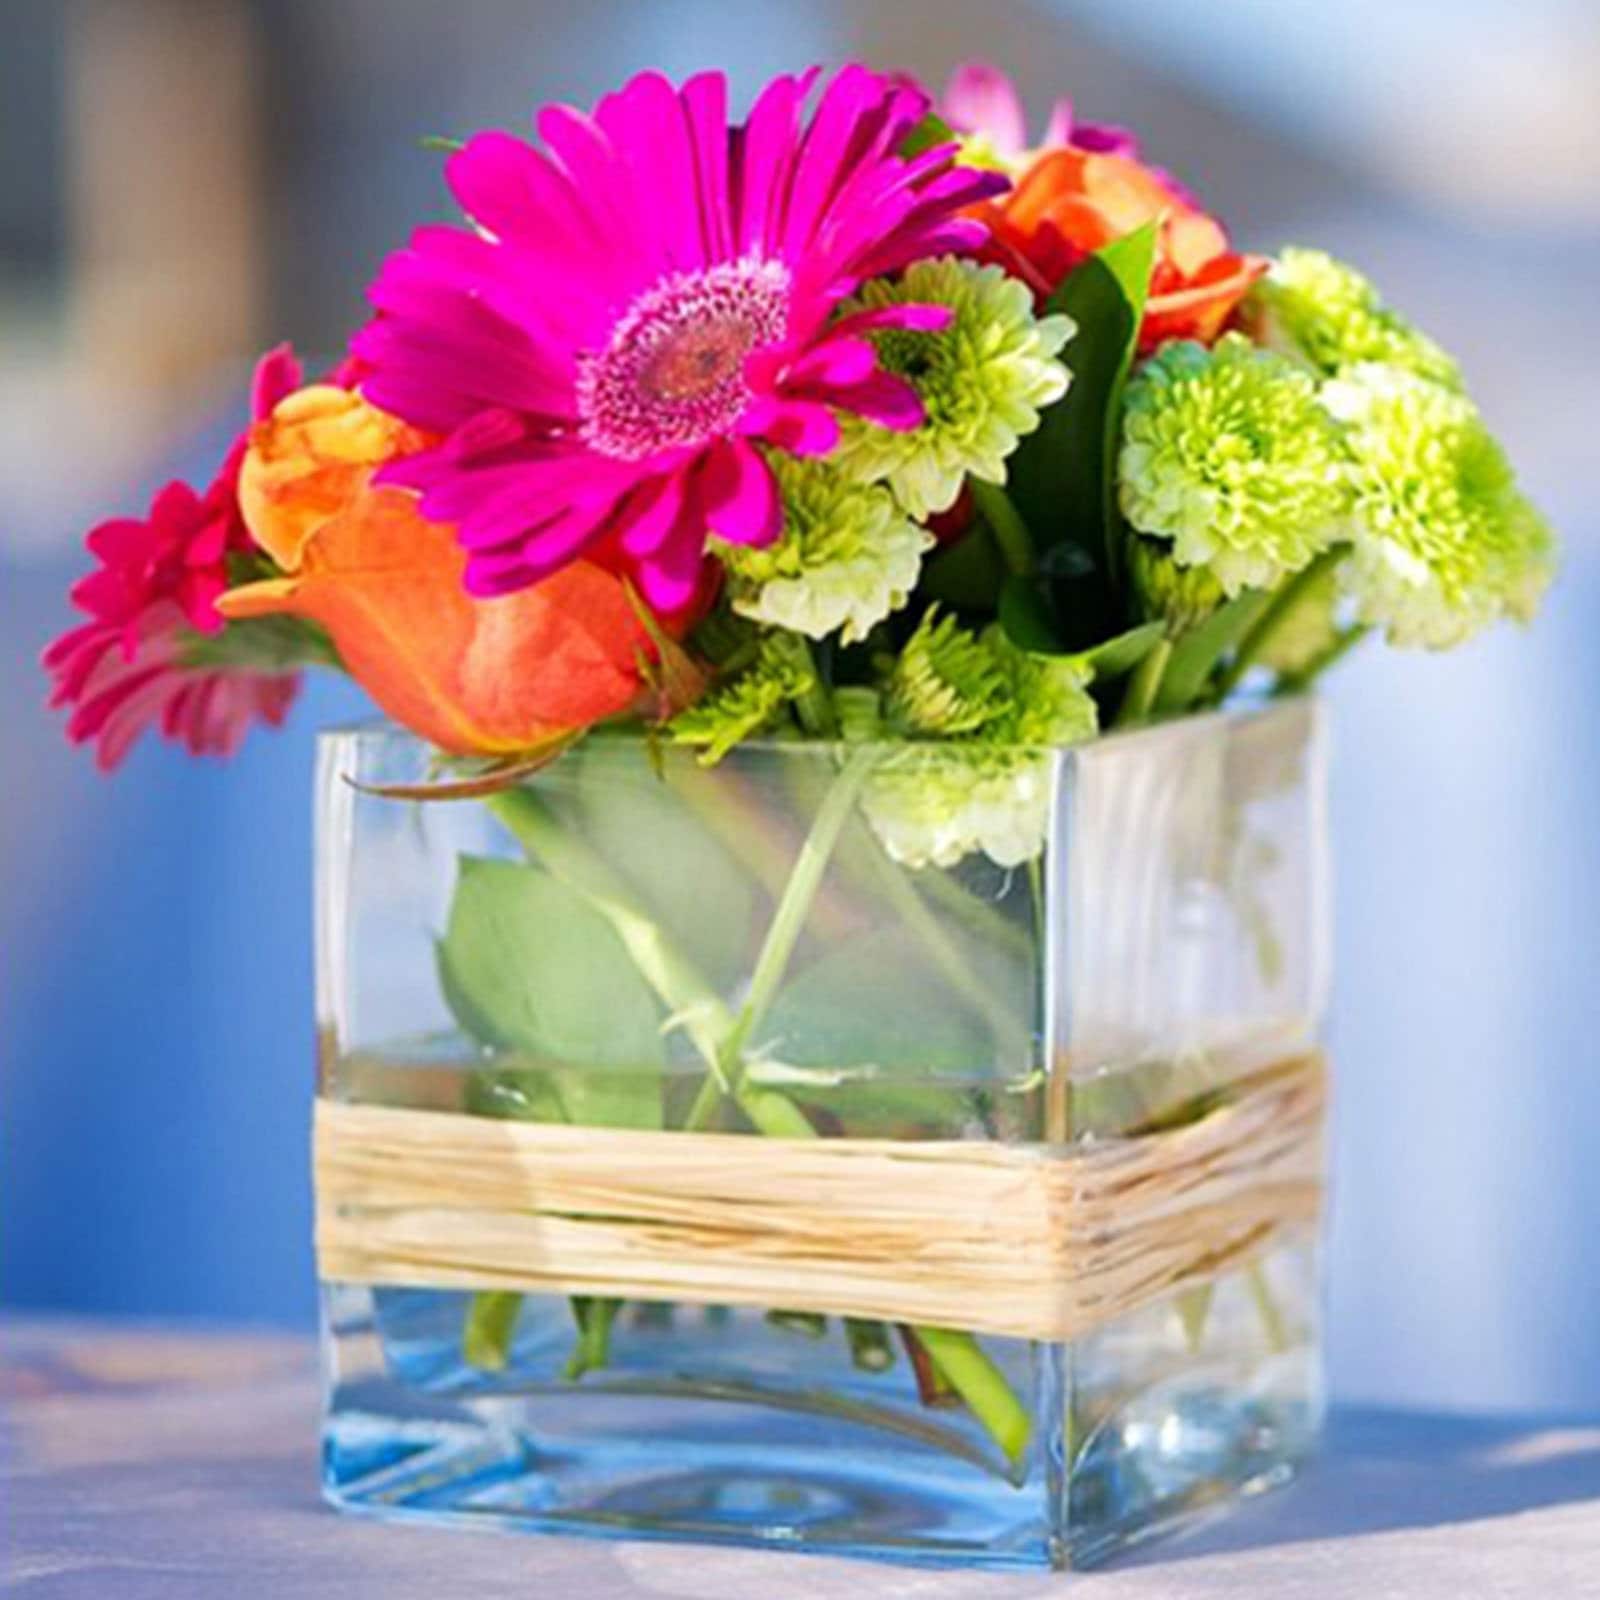 4 Clear Glass Vase, Flower Vase, Square Glass Vase, Glass Vase for Candles,  Wedding Centerpiece, Modern Decor, Housewarming Gift 